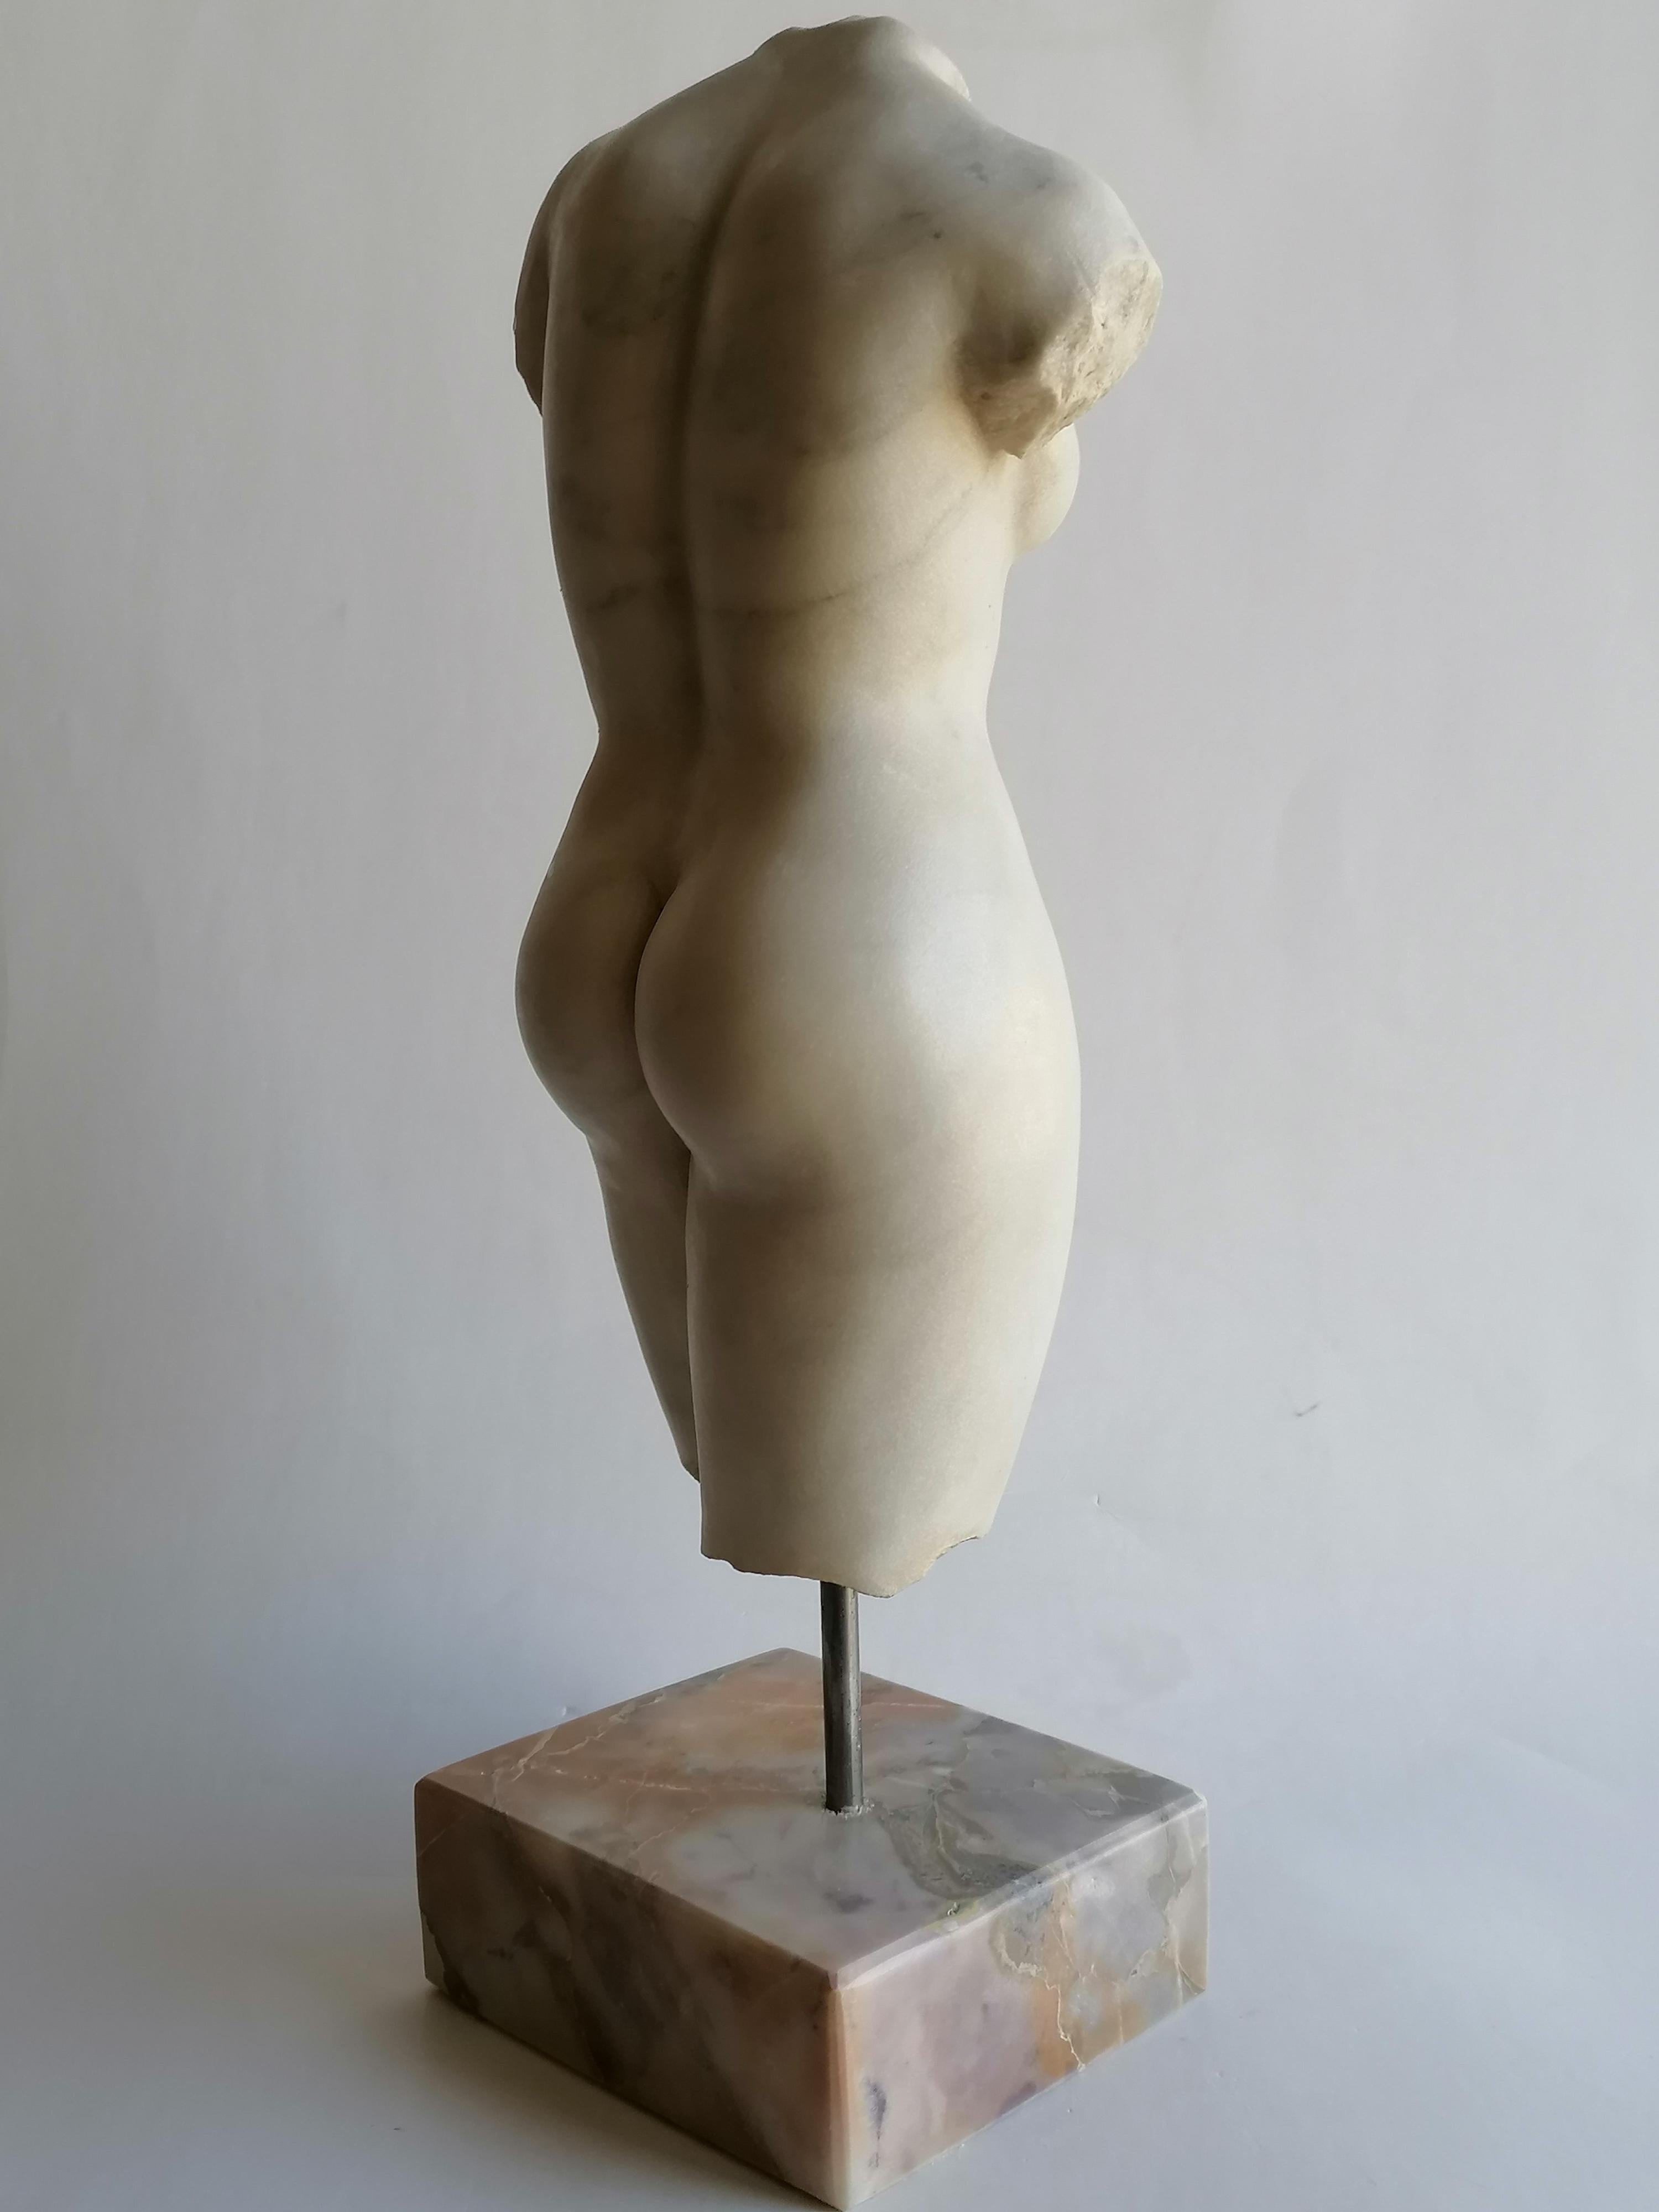 italien Torse féminin en marbre blanc de Carrare - fabriqué en Italie